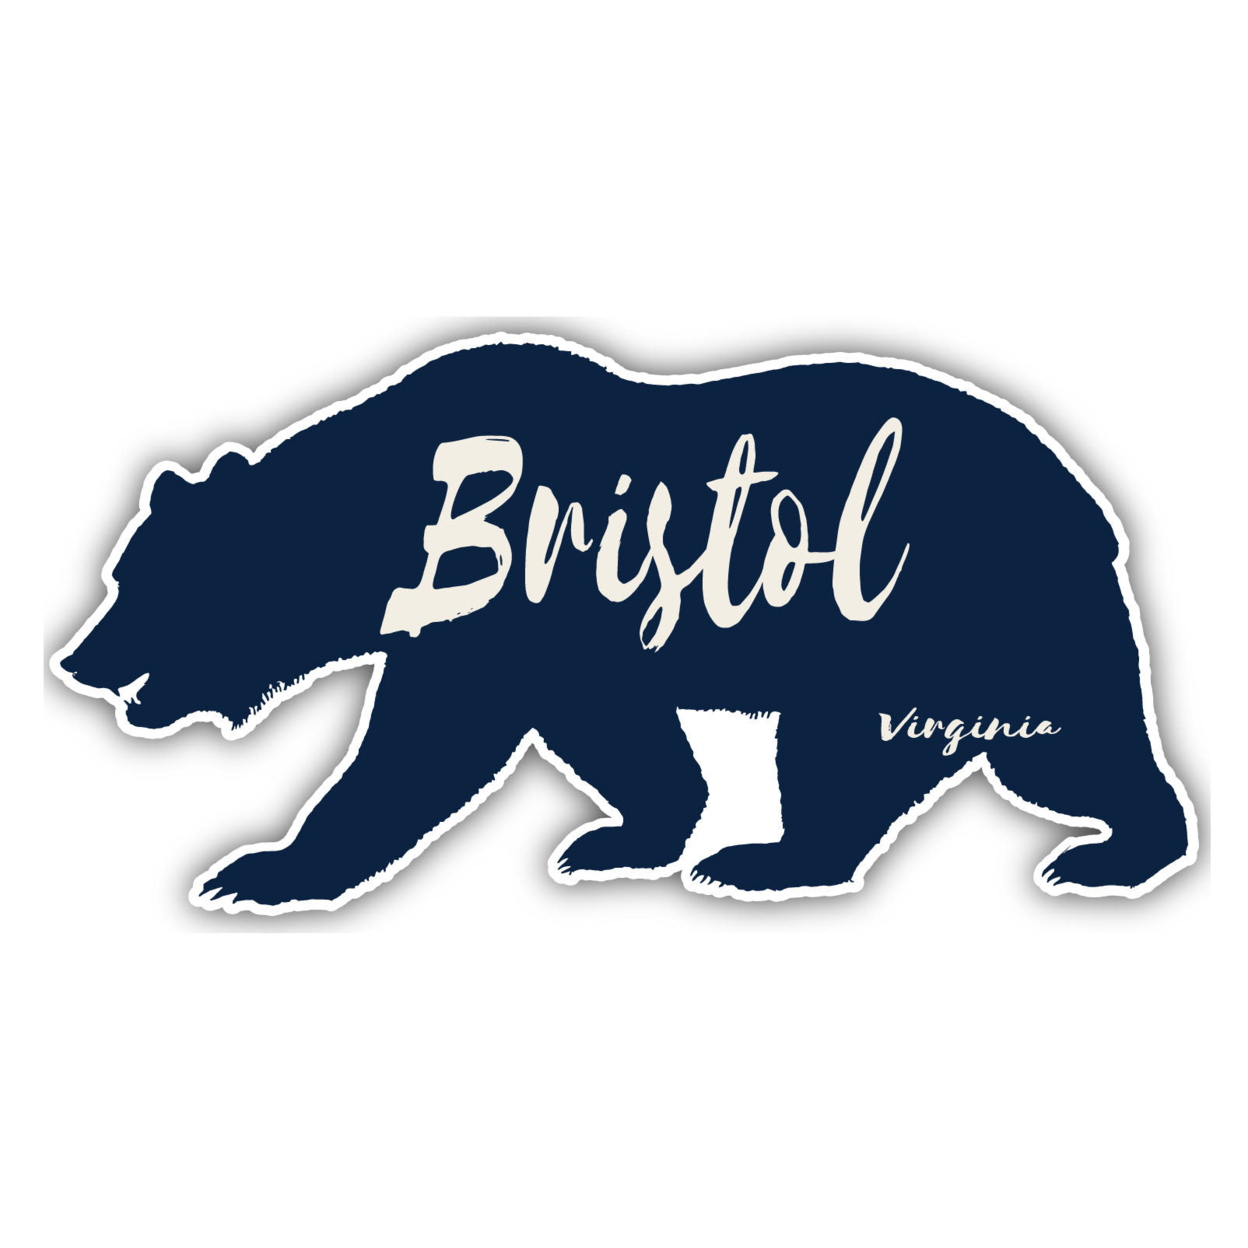 Bristol Virginia Souvenir Decorative Stickers (Choose Theme And Size) - 4-Pack, 4-Inch, Bear